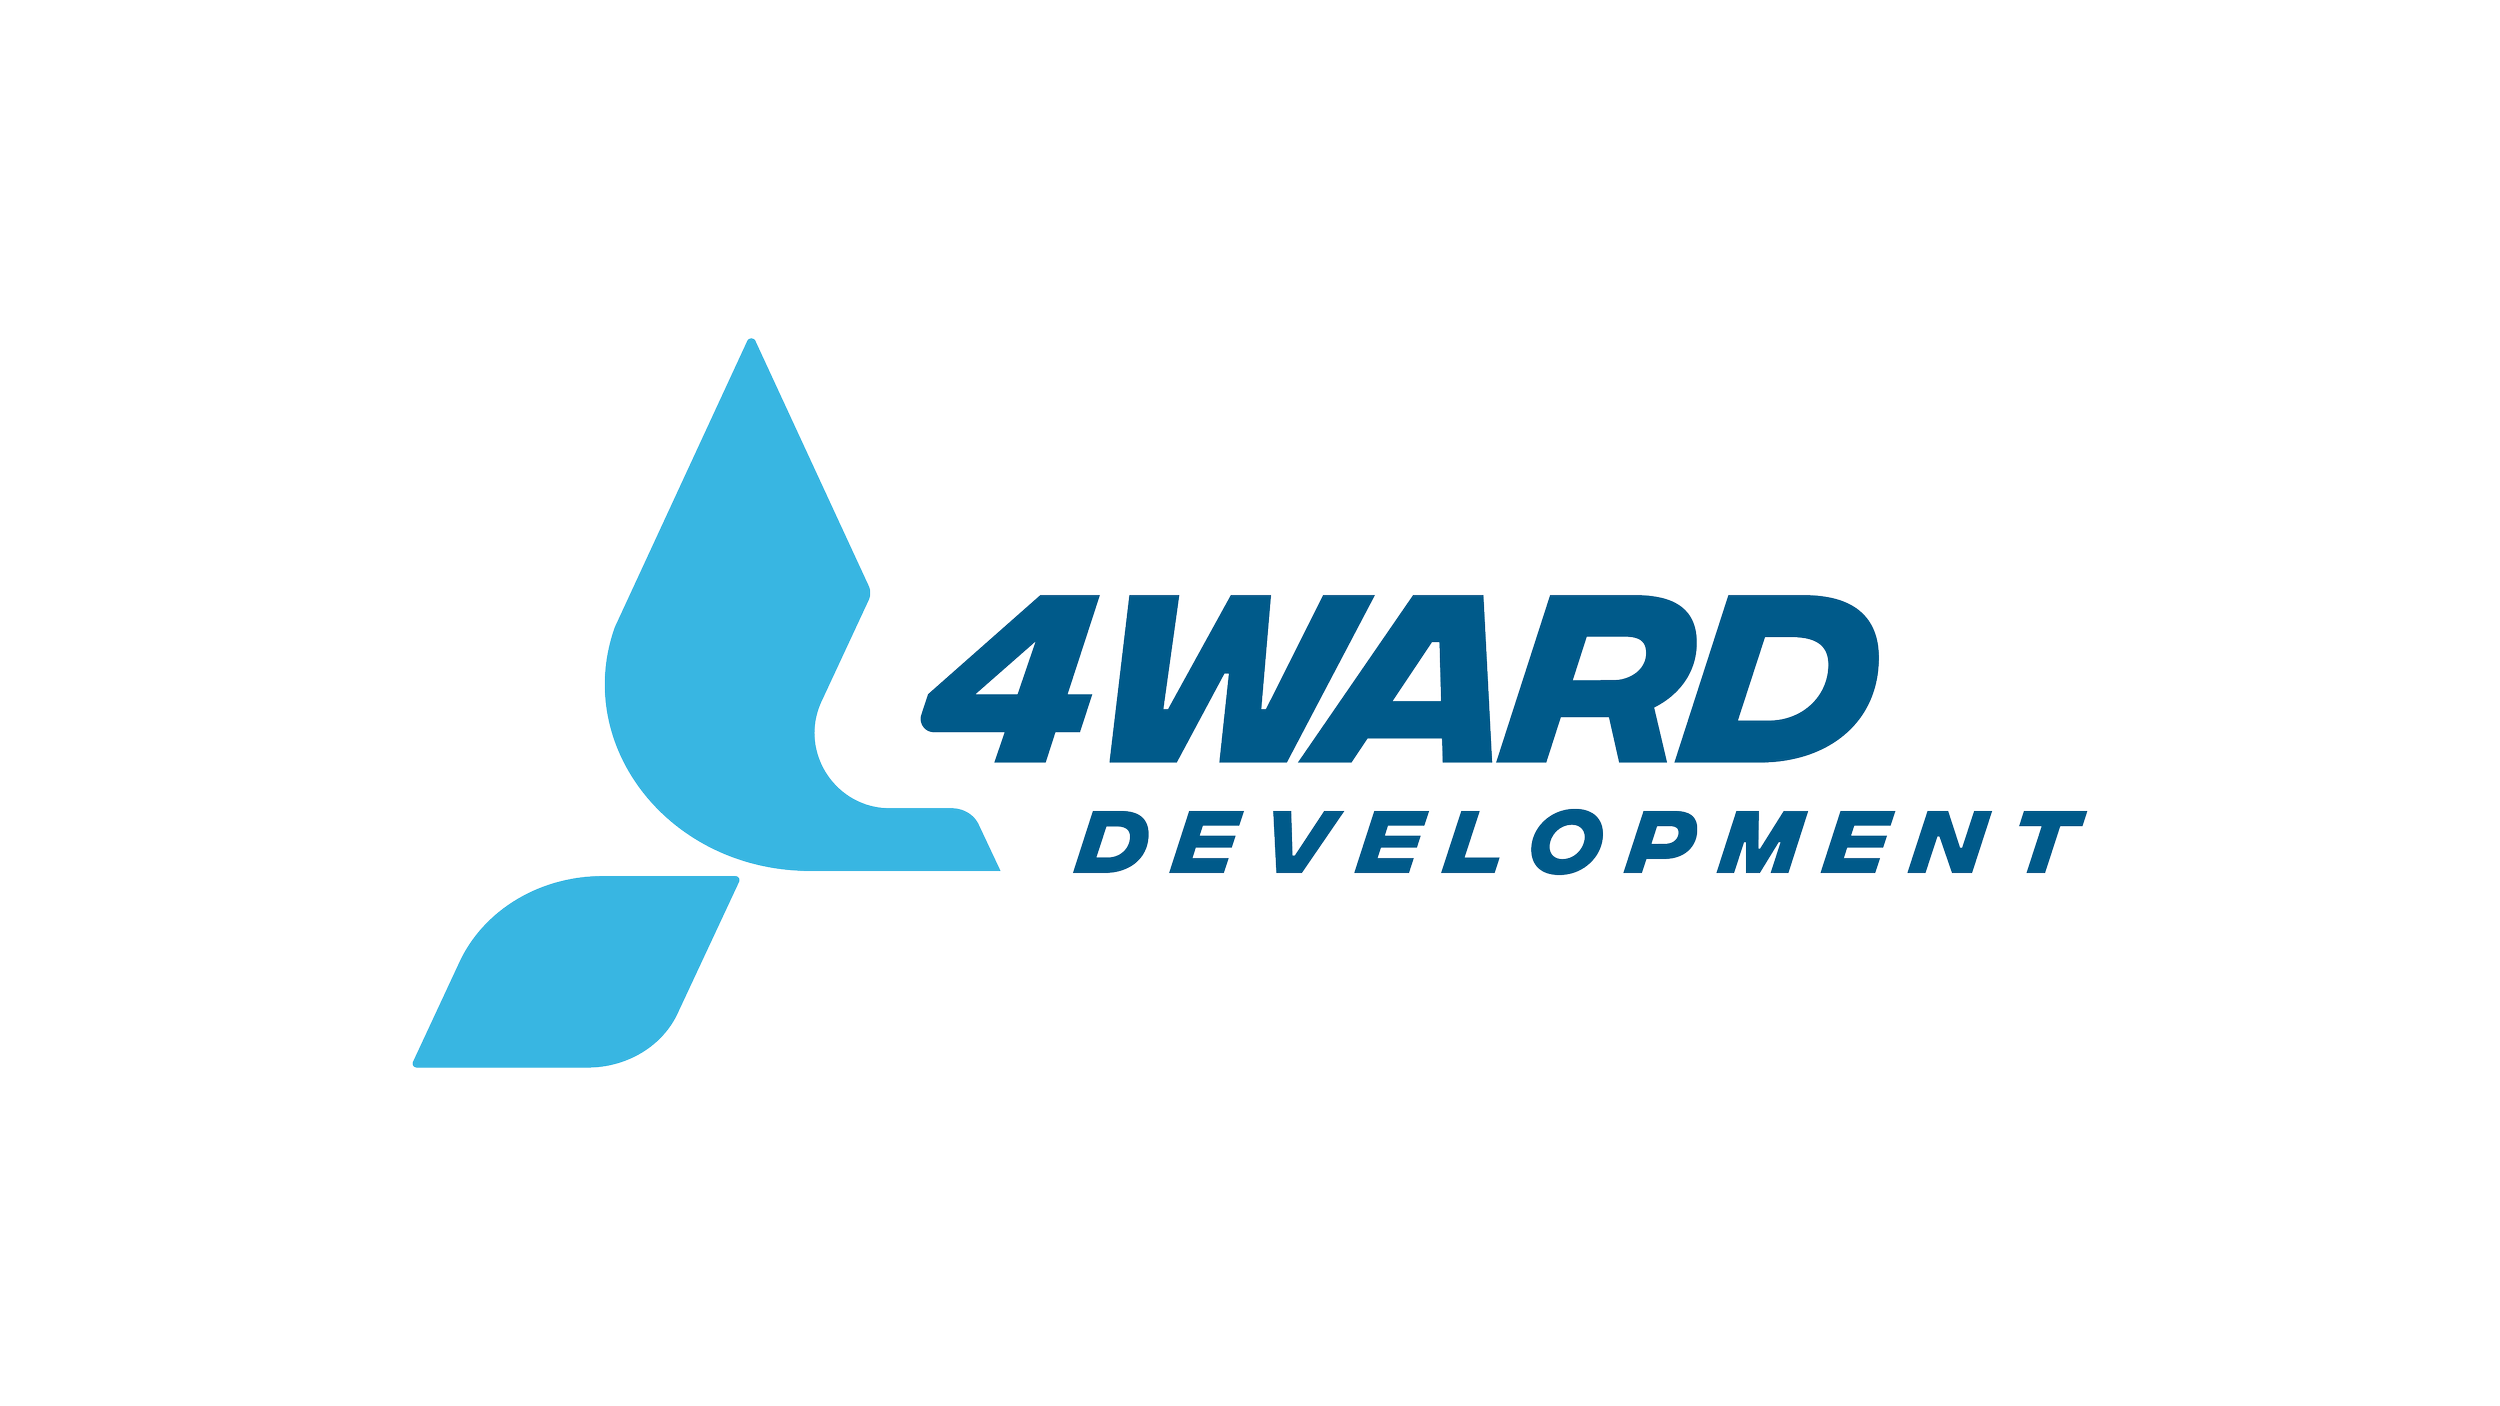 4Ward Development